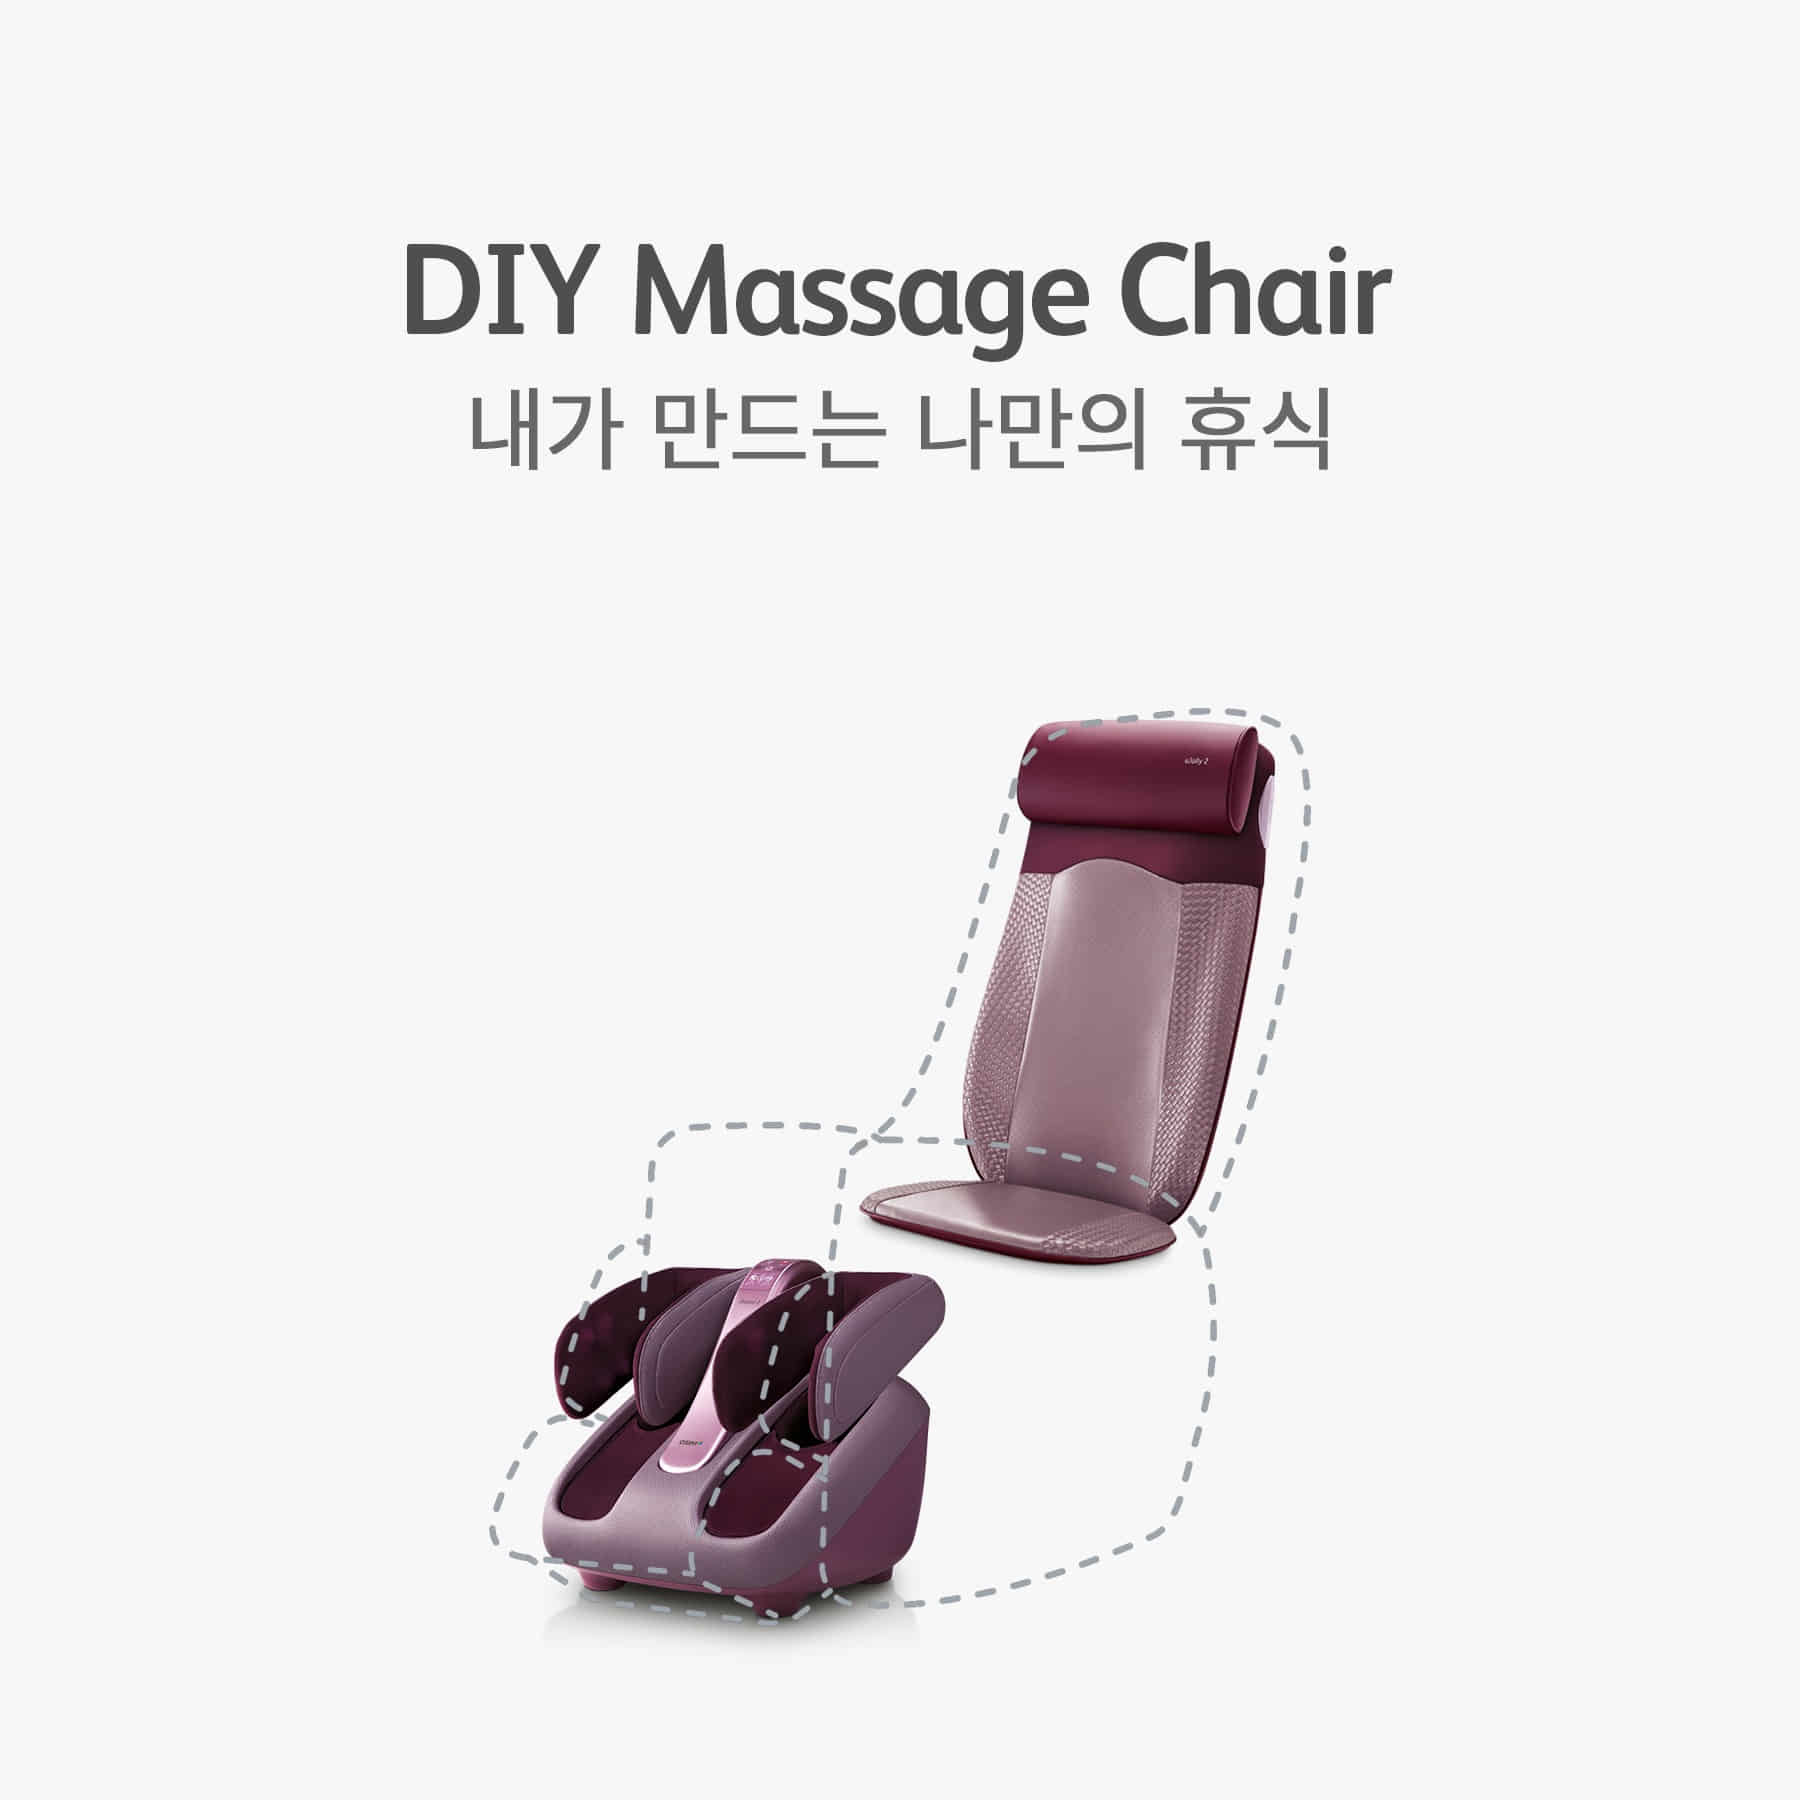 DIY 마사지 체어 (DIY Massage Chair)